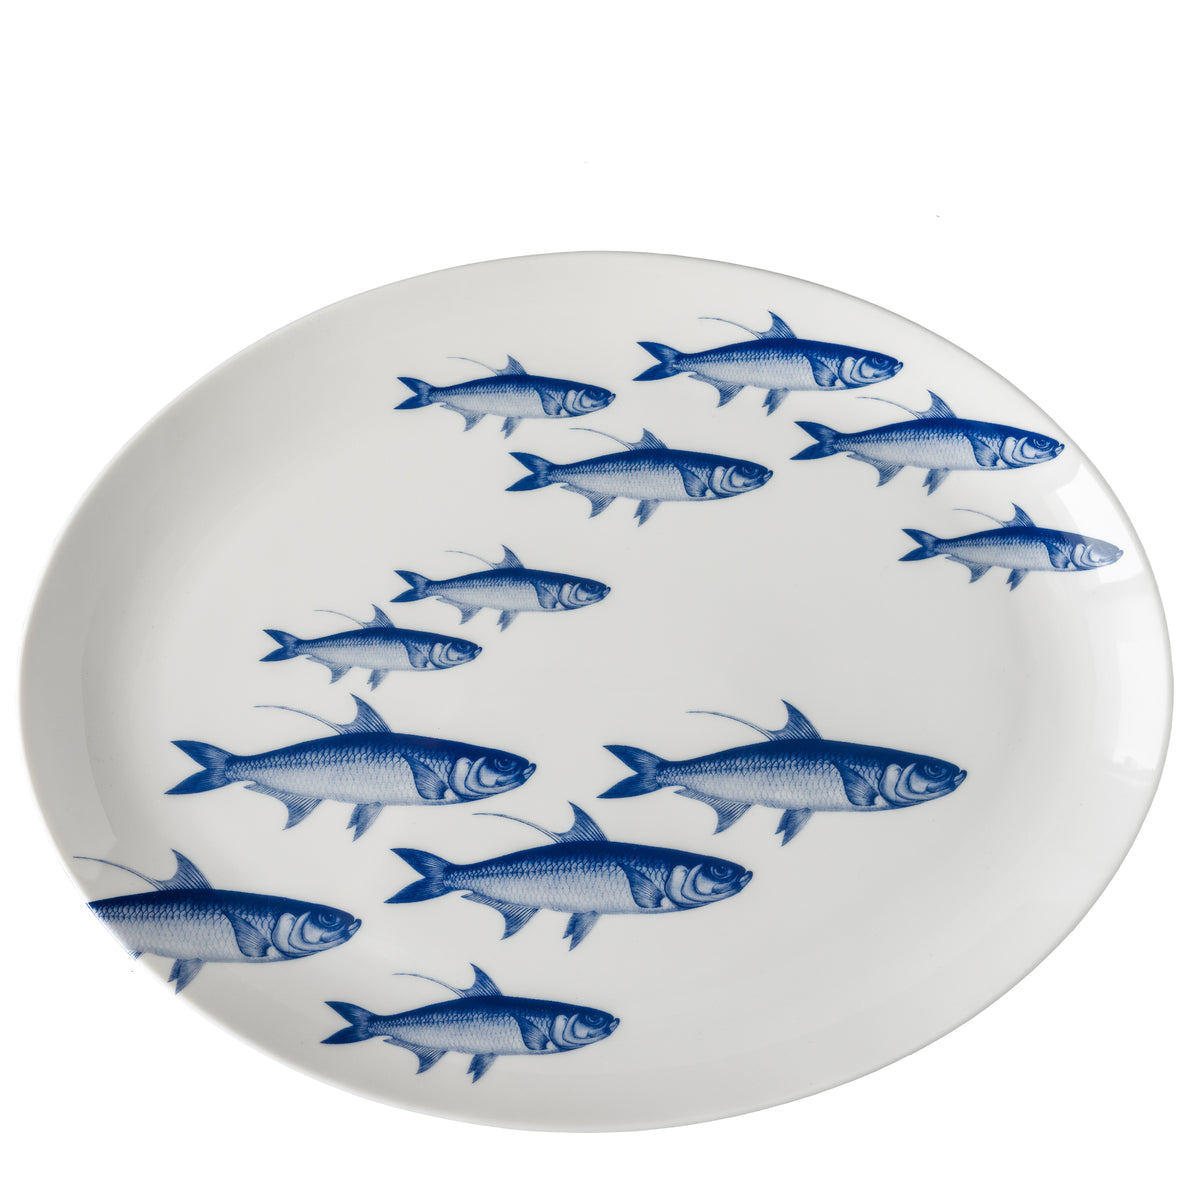 School of Fish Coupe Oval Platter - Caskata